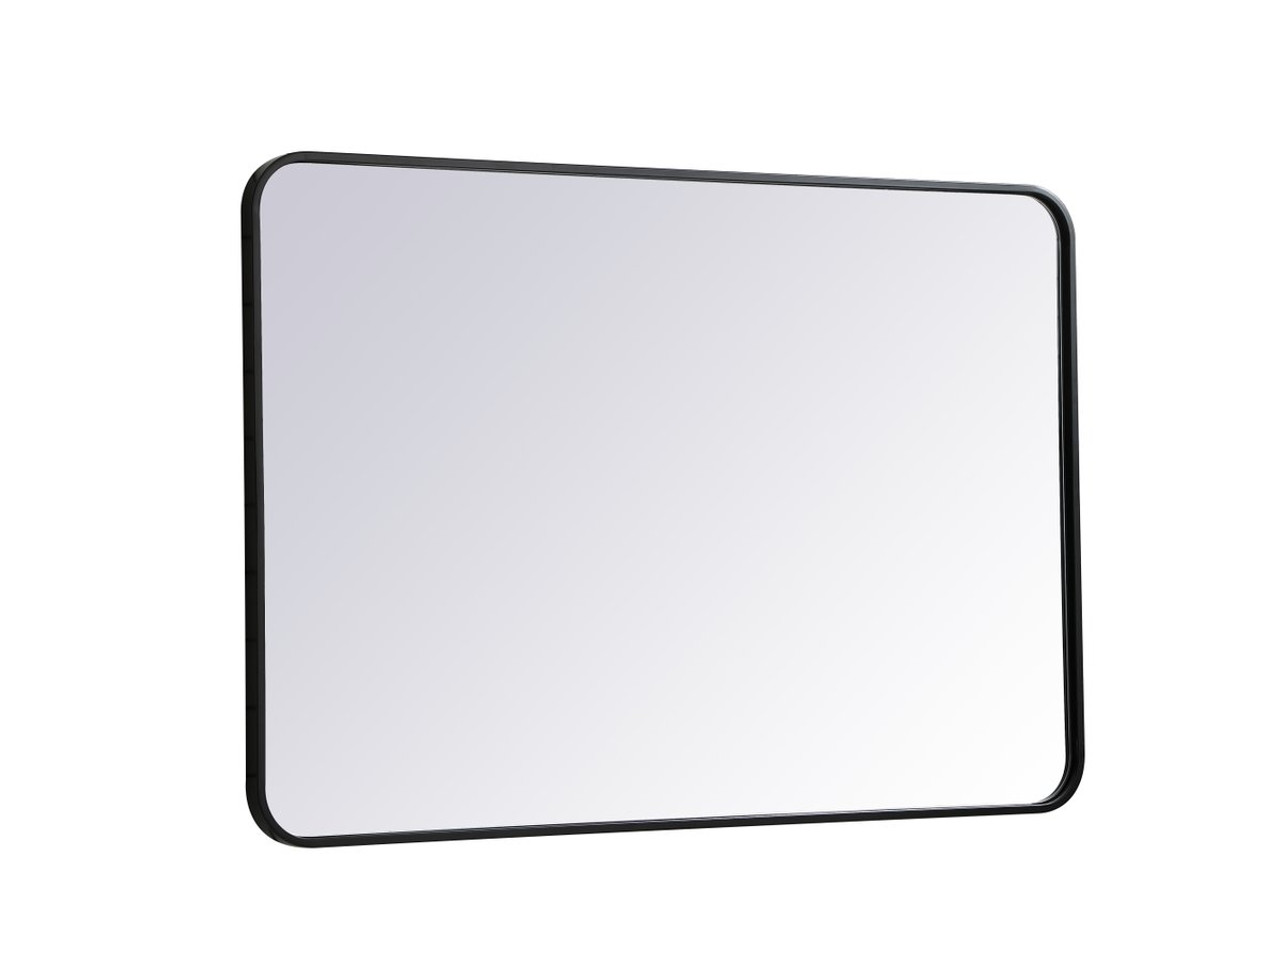 Elegant Decor MR802740BK Soft corner metal rectangular mirror 27x40 inch in Black